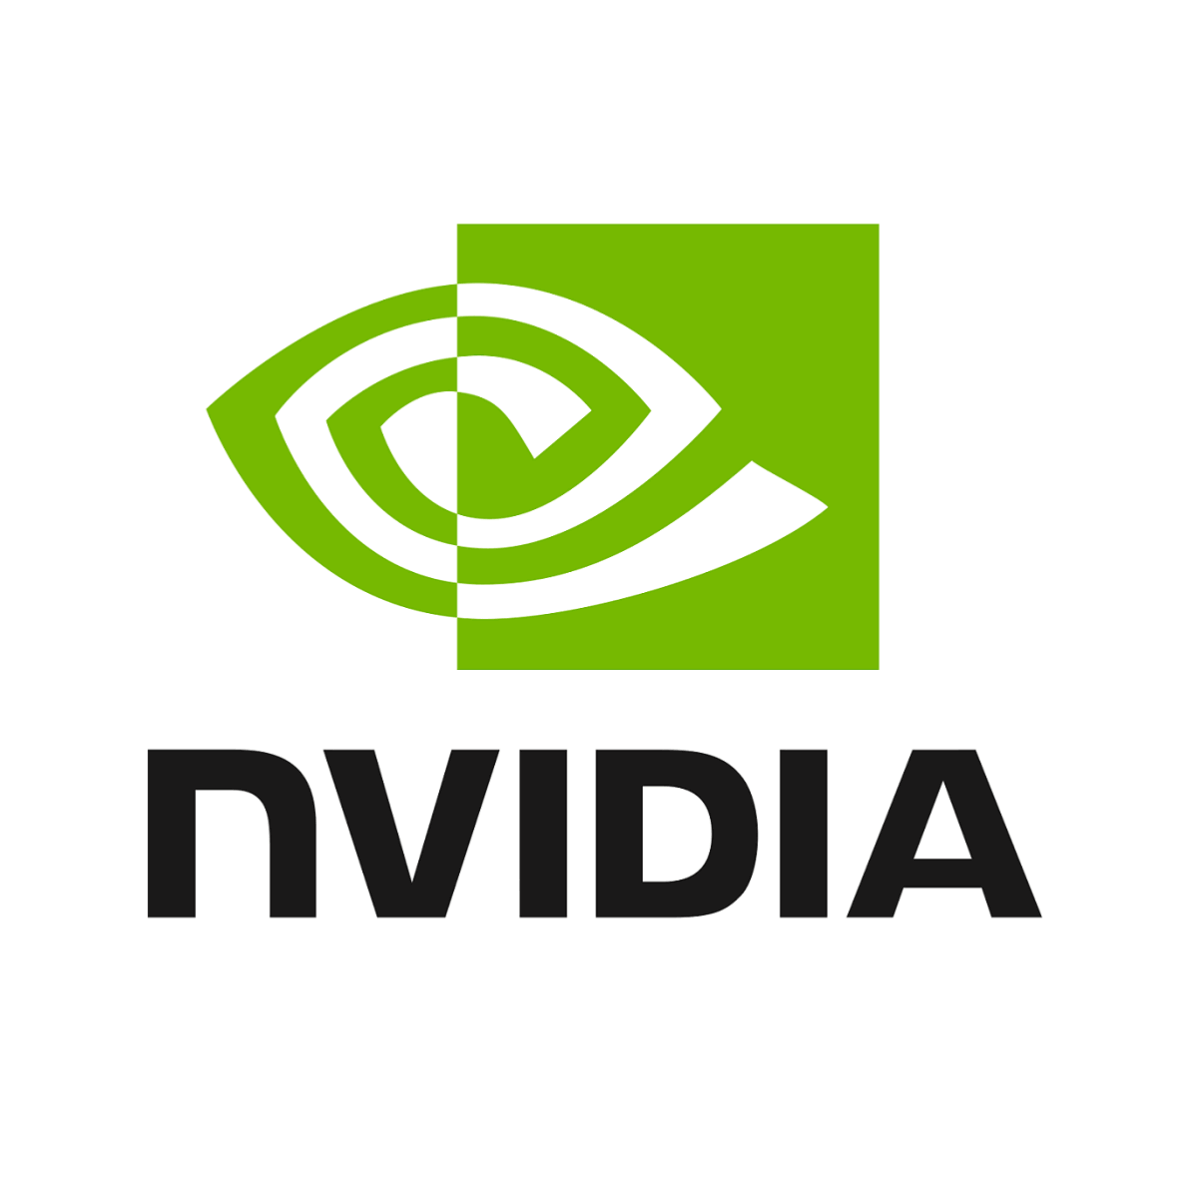 Nvidia logo Can't download Nvidia drivers Win 10